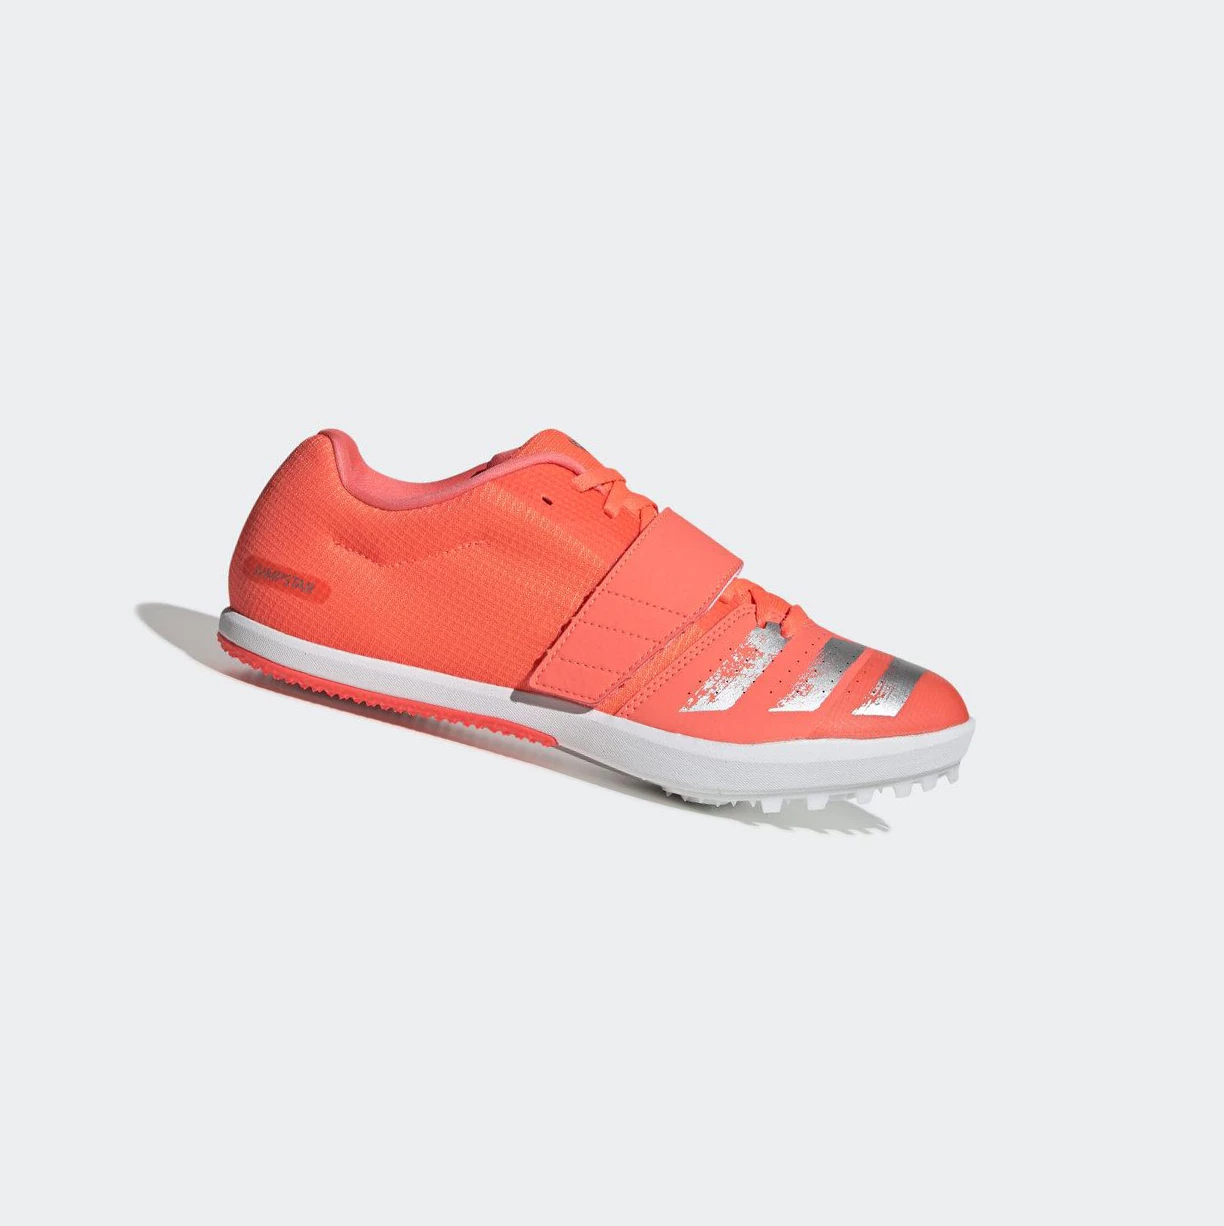 Track Spikes Adidas Jumpstar Panske Oranžové | 264SKKCQUIF